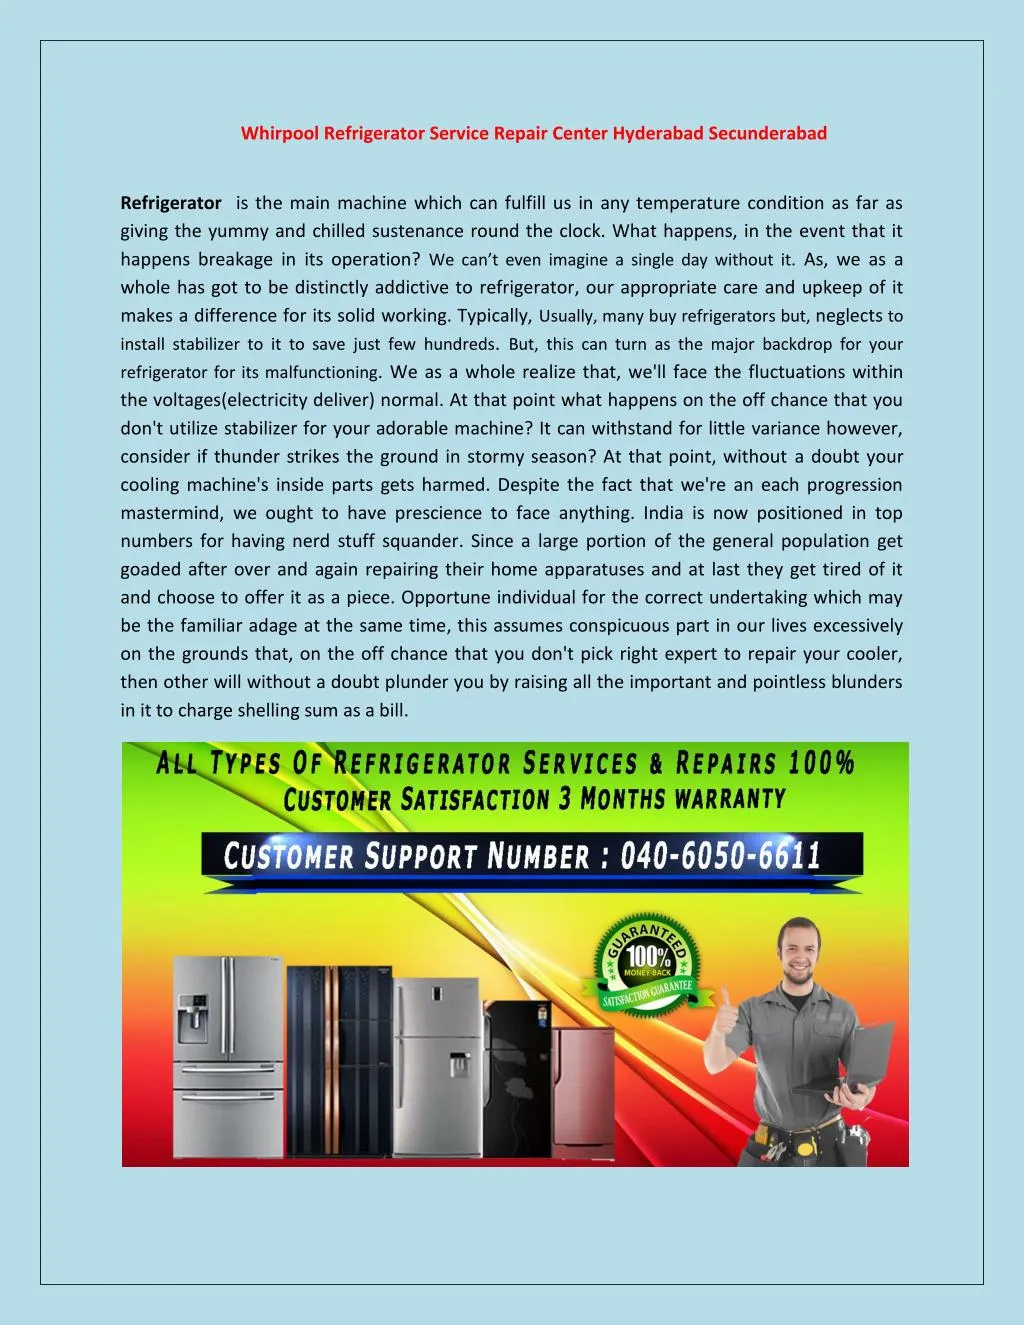 whirpool refrigerator service repair center